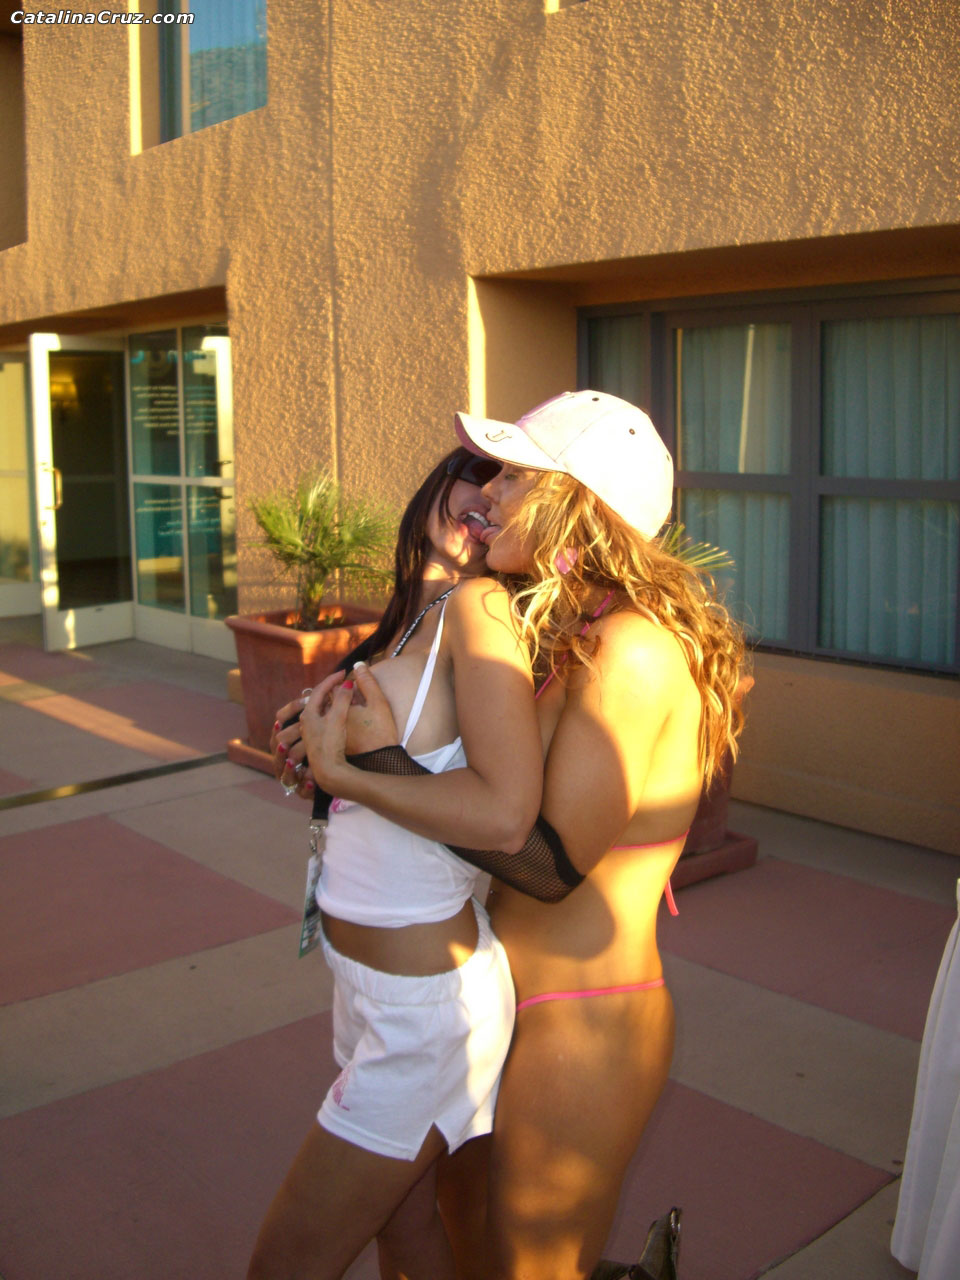 Hot pornstar Catalina Cruz poses with her friends & flashes her tits in public foto porno #425104896 | Catalina Cruz Pics, Catalina Cruz, Public, porno mobile